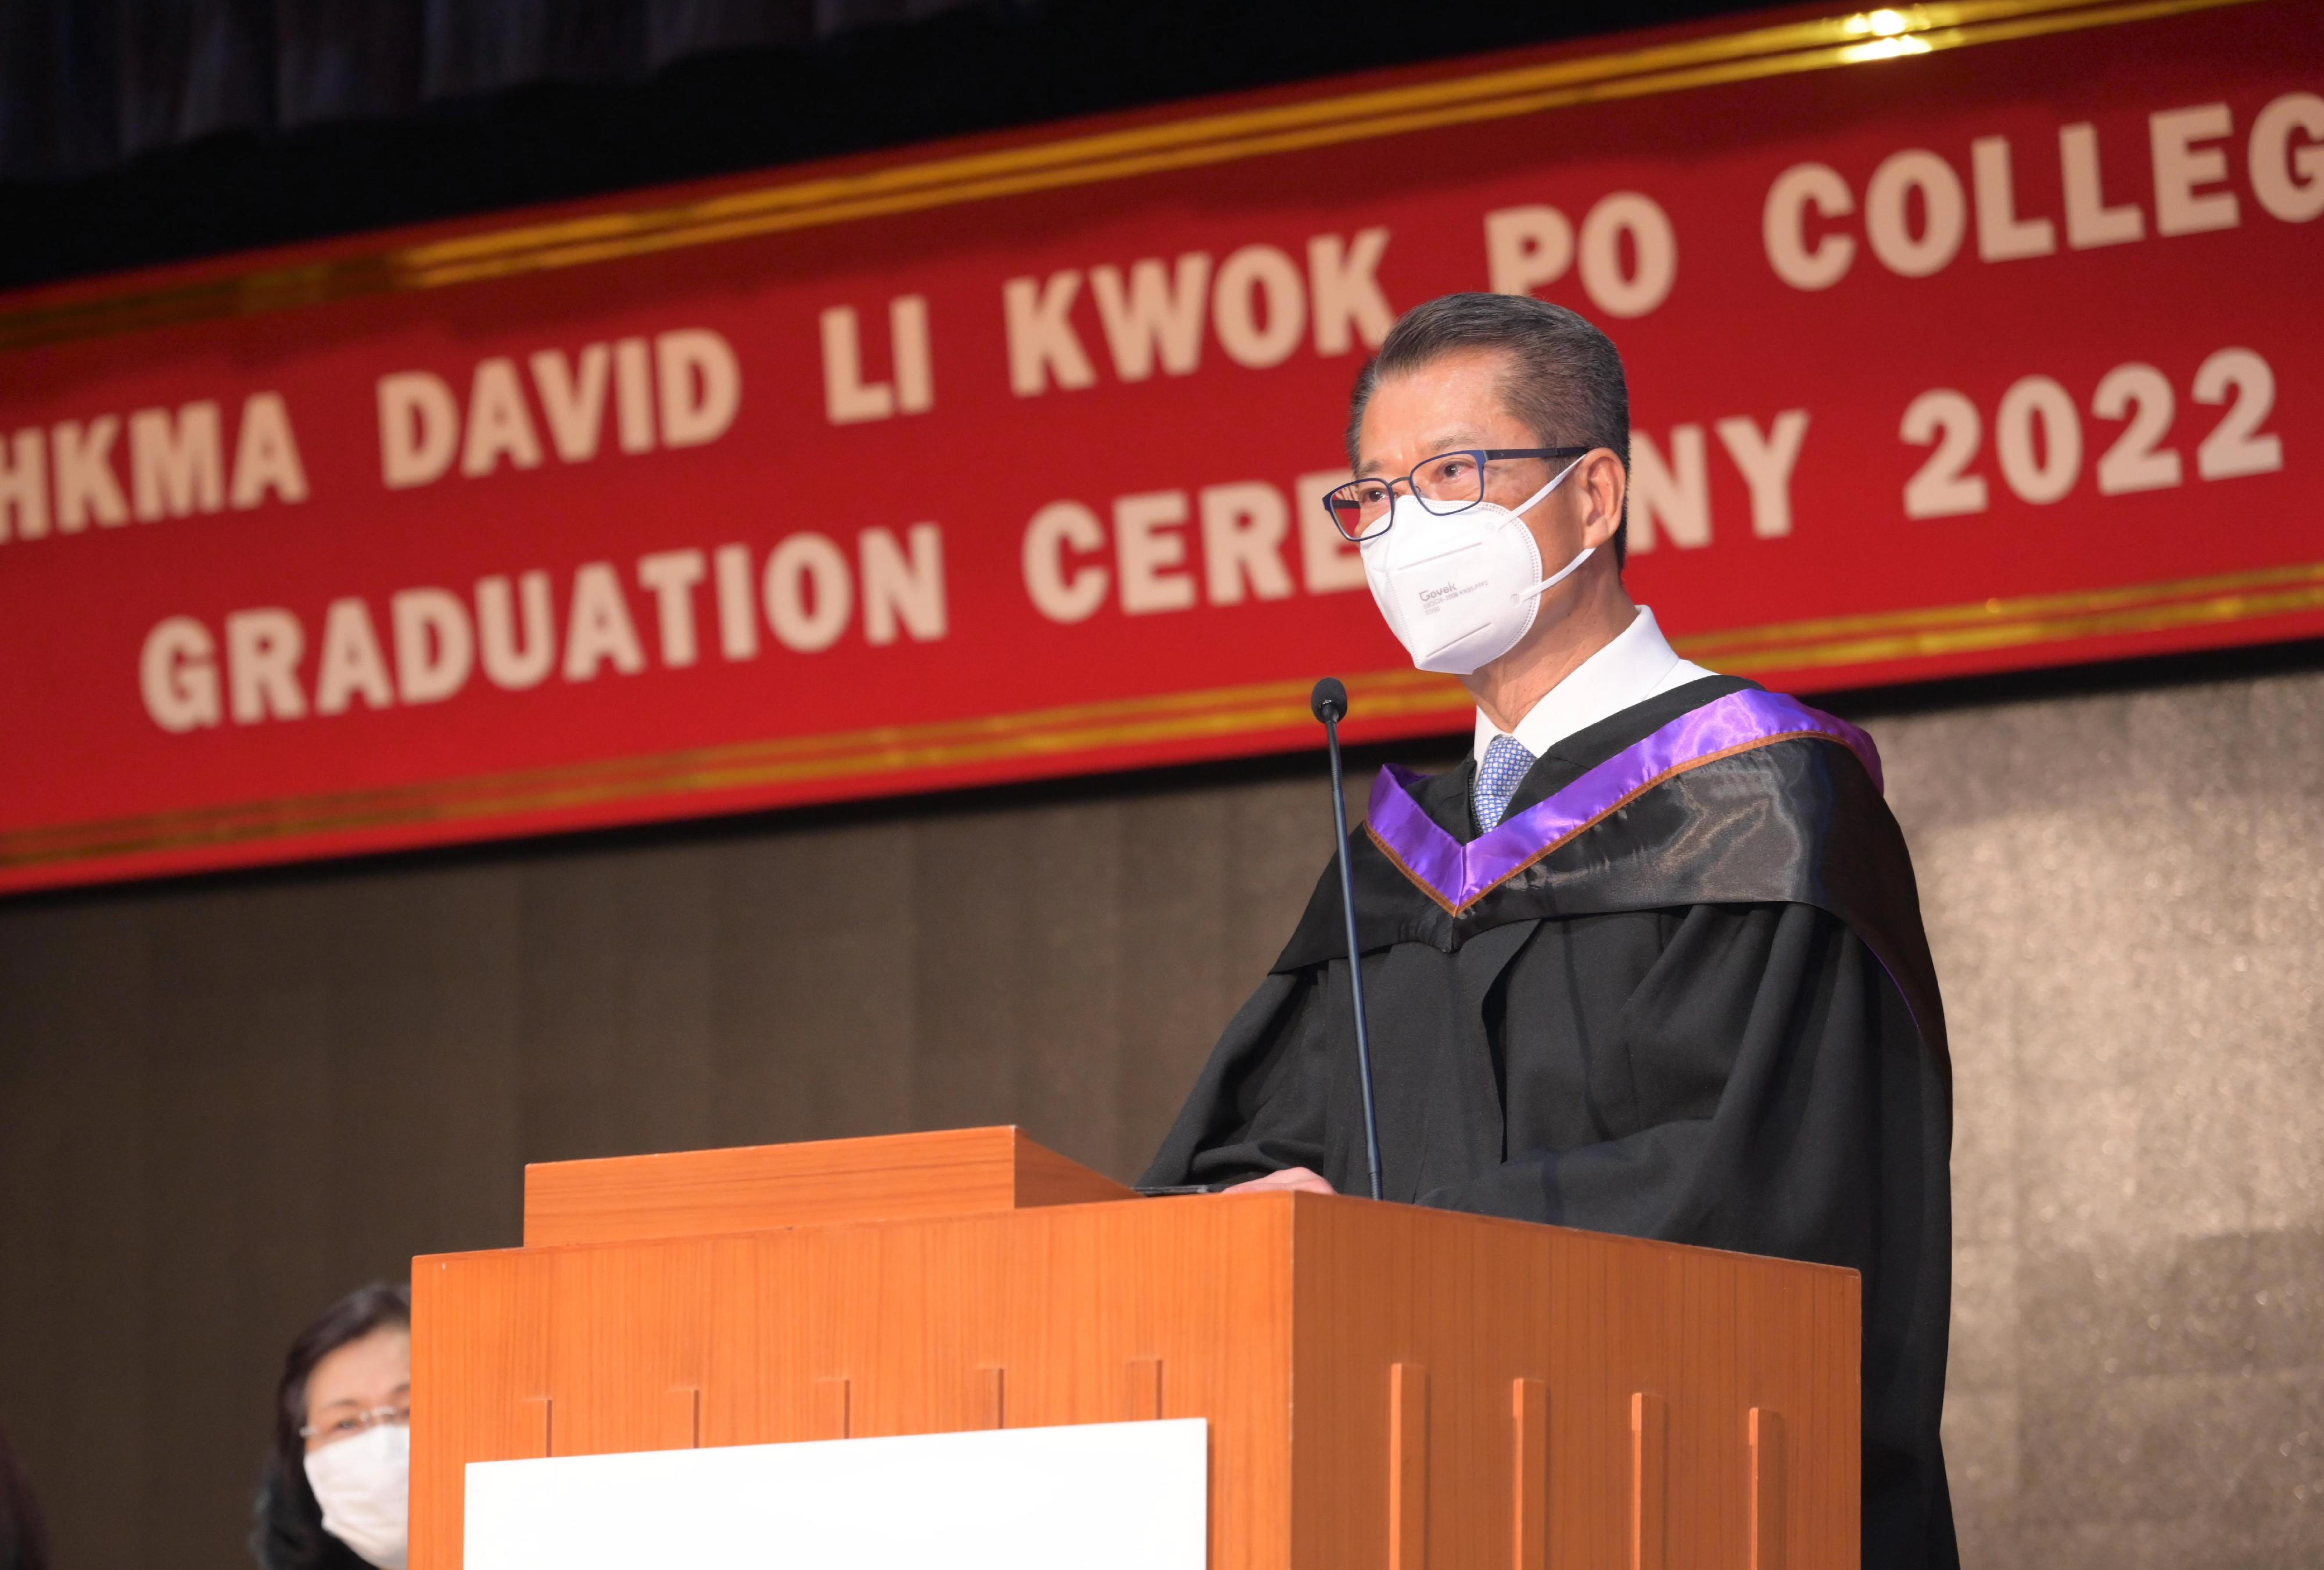 The Financial Secretary, Mr Paul Chan, gives a keynote speech at the Hong Kong Management Association David Li Kwok Po College Graduation Ceremony 2022 today (July 9).